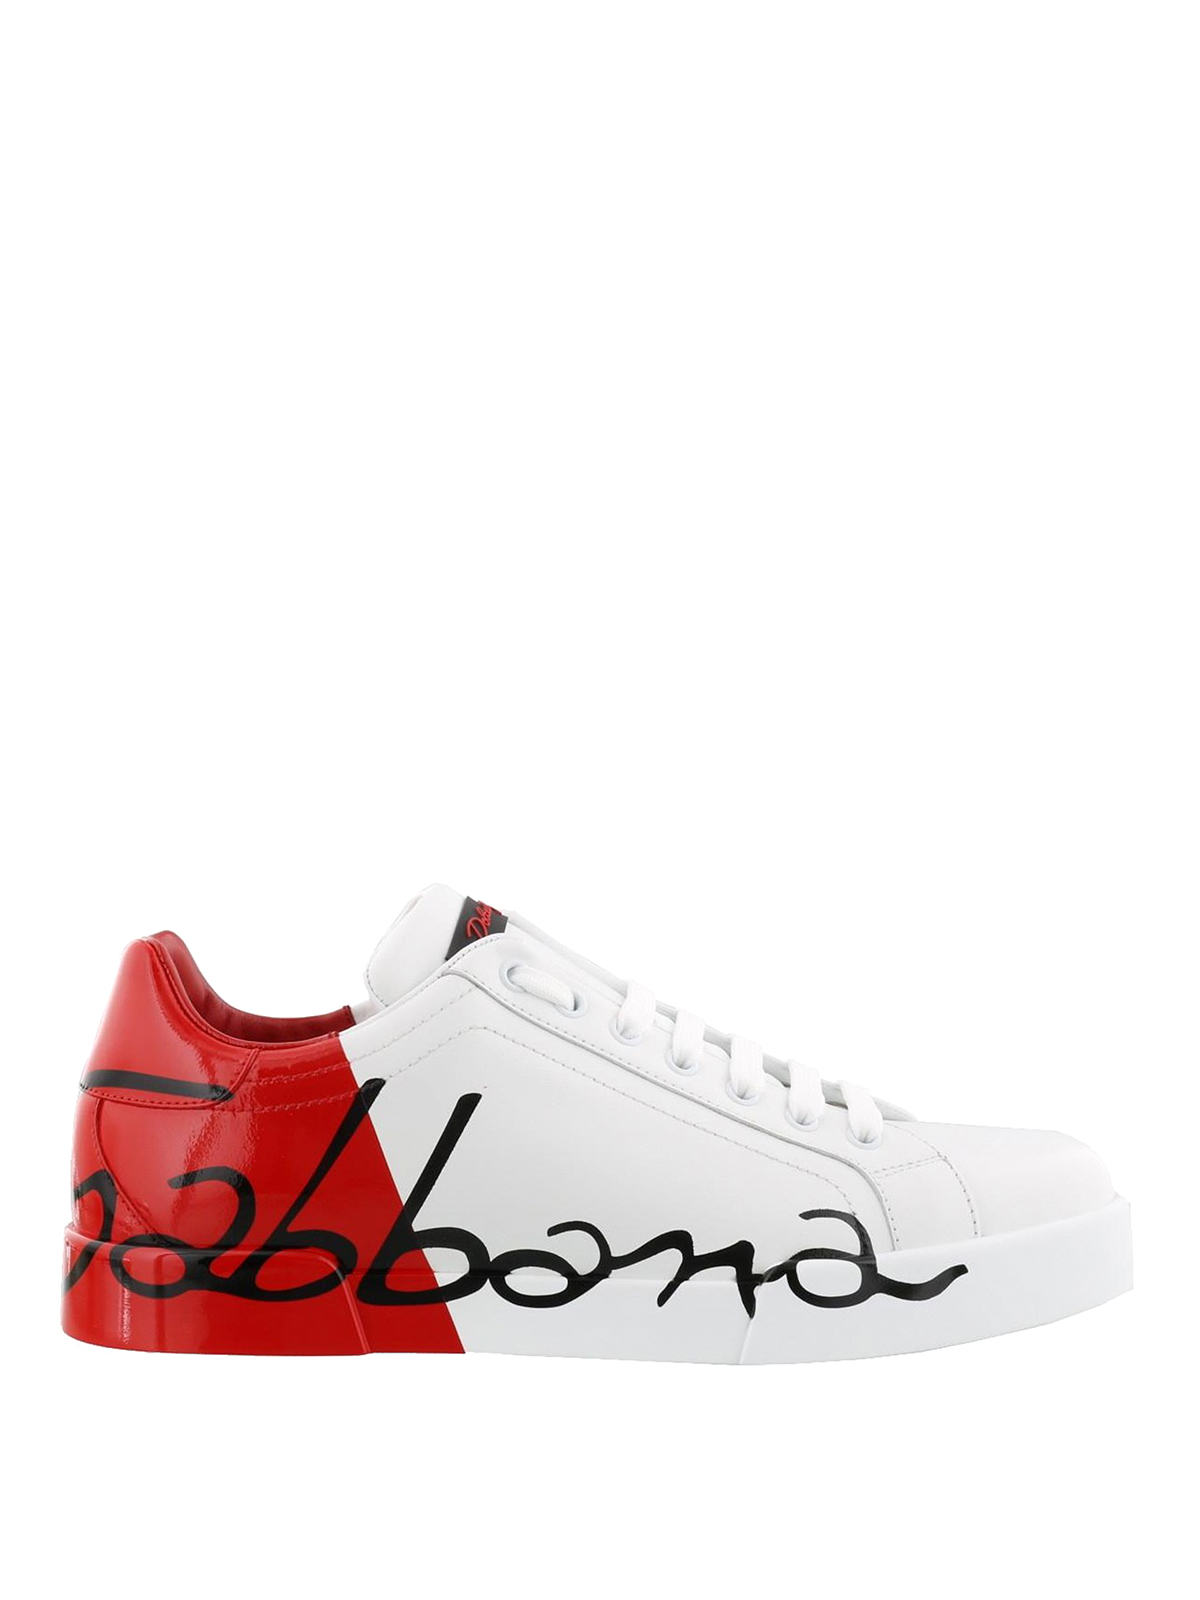 Dolce \u0026 Gabbana - Sneaker Portofino bianche e rosse - sneakers -  CK1600AI053HR821